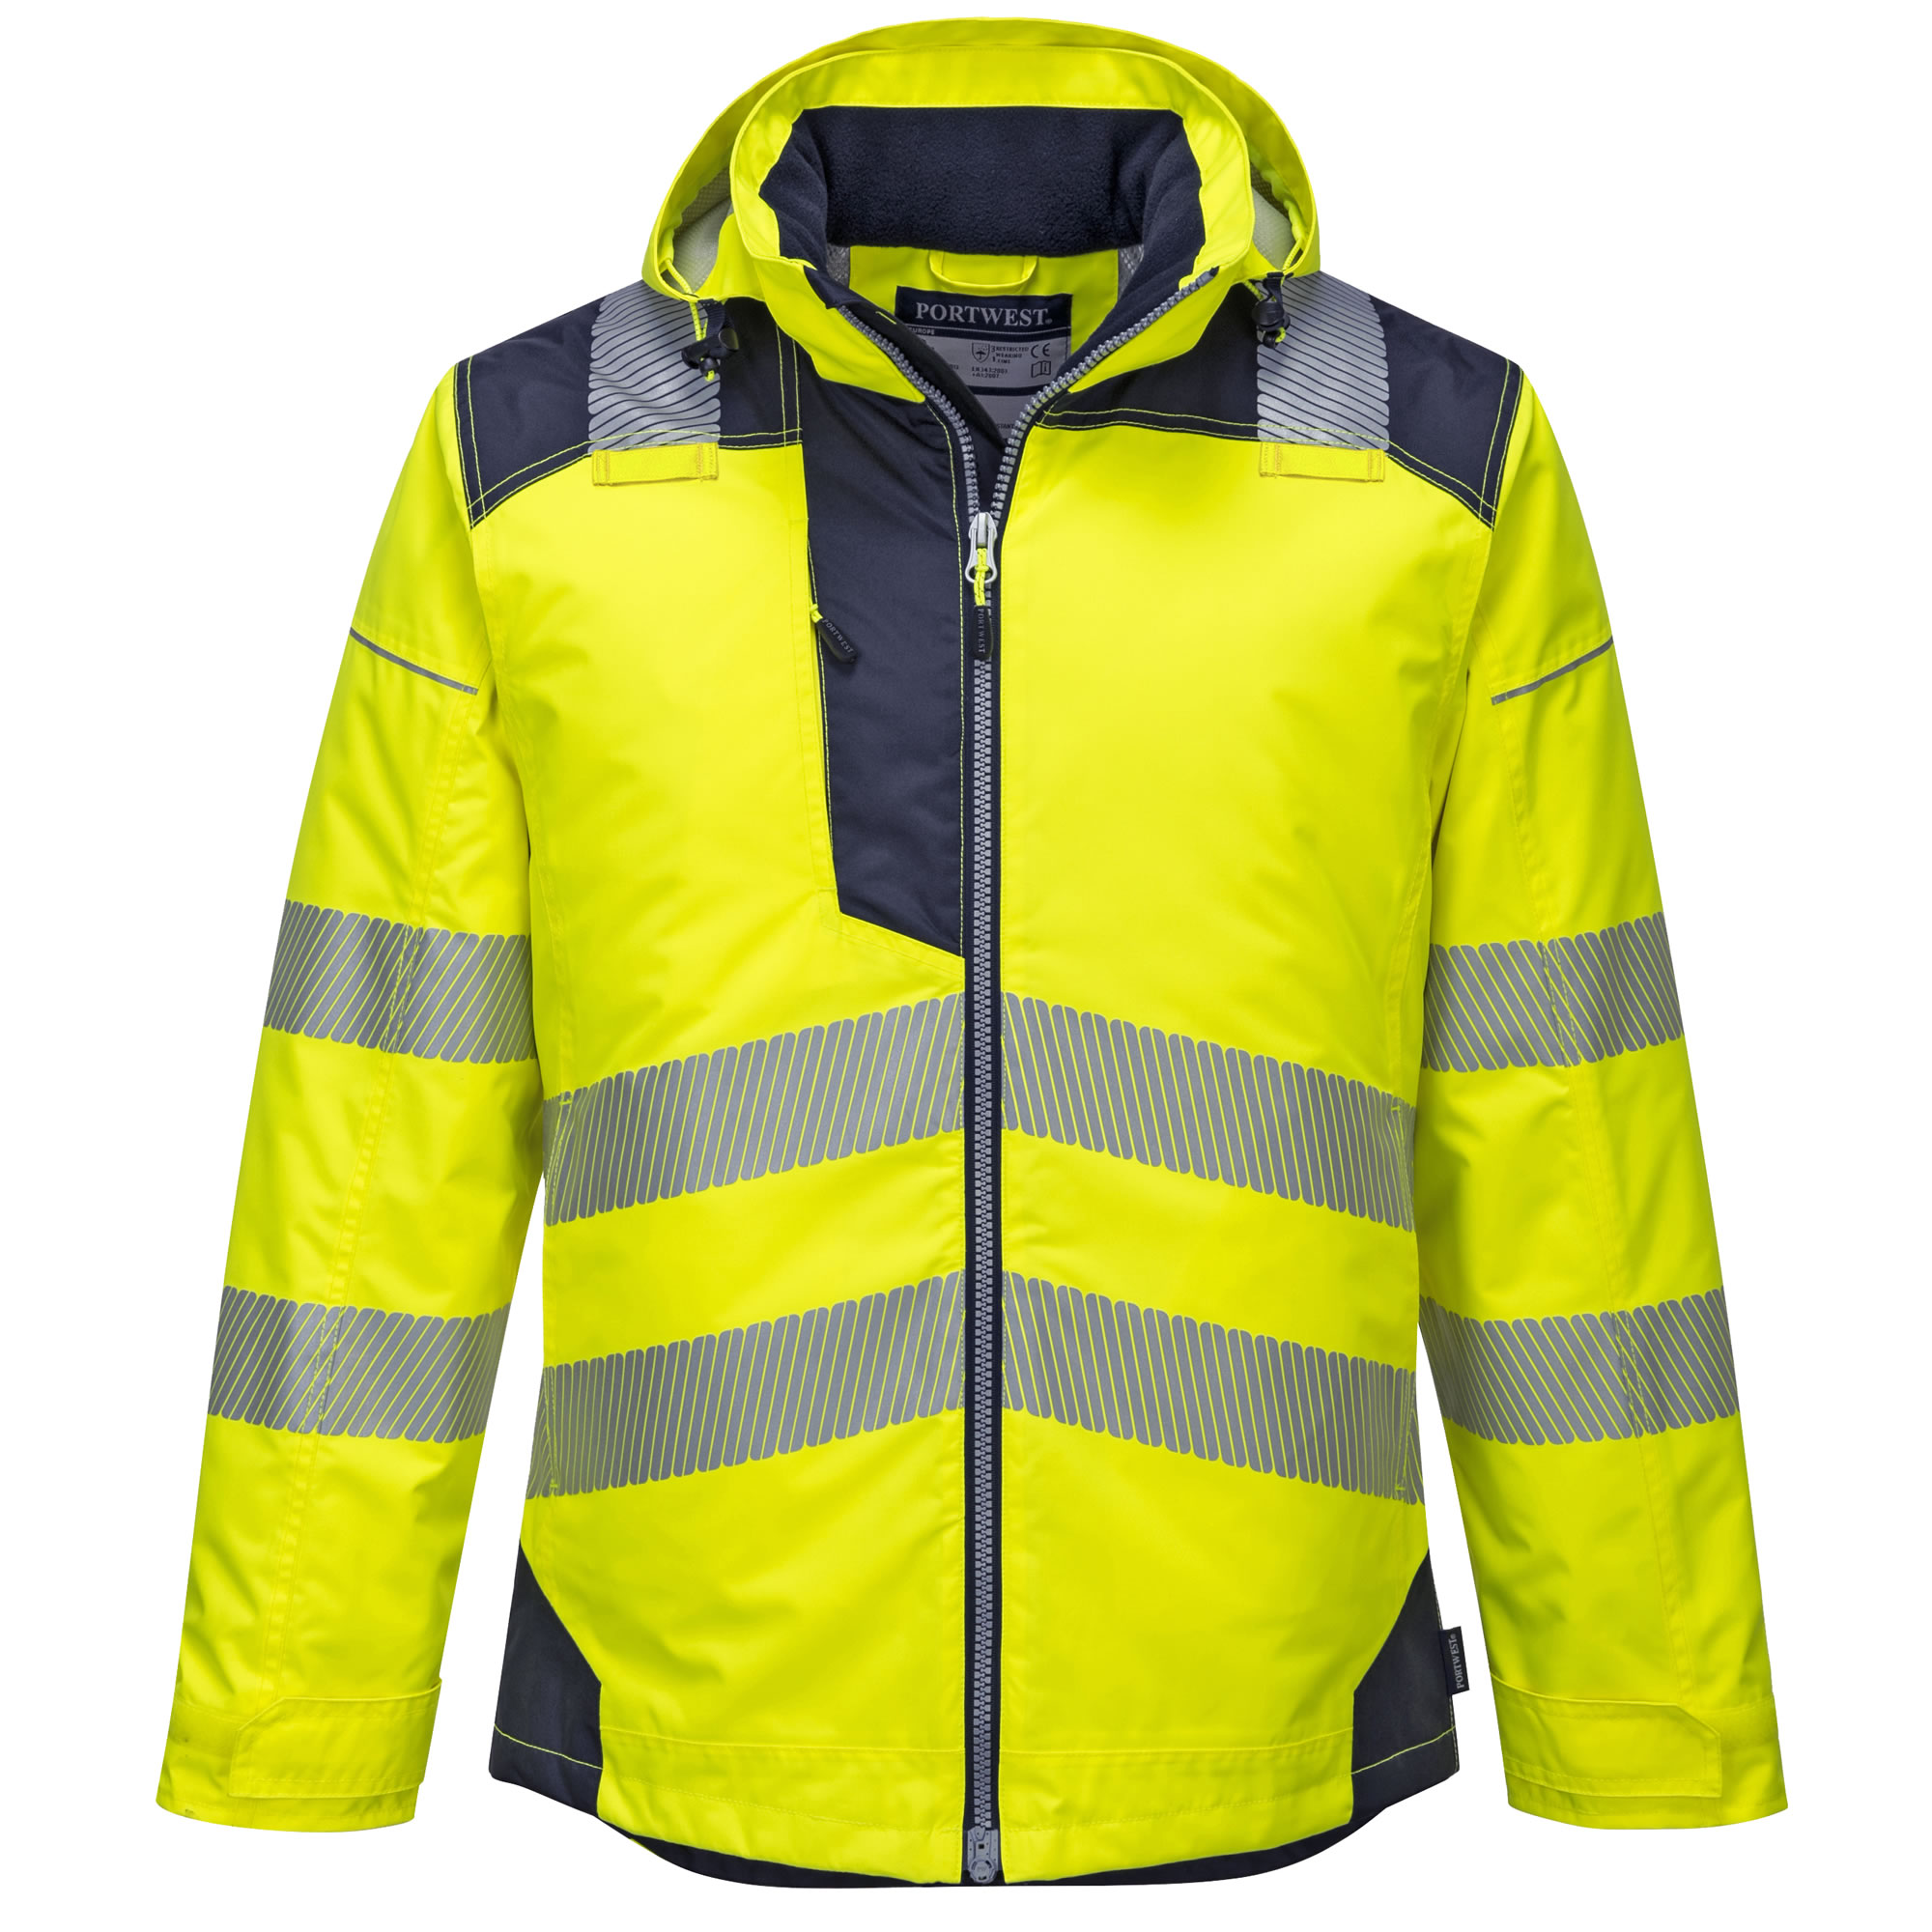 PORTWEST Hi Vis Winter Rain Jacket Waterproof Reflective Safety Work Wear Safety eBay